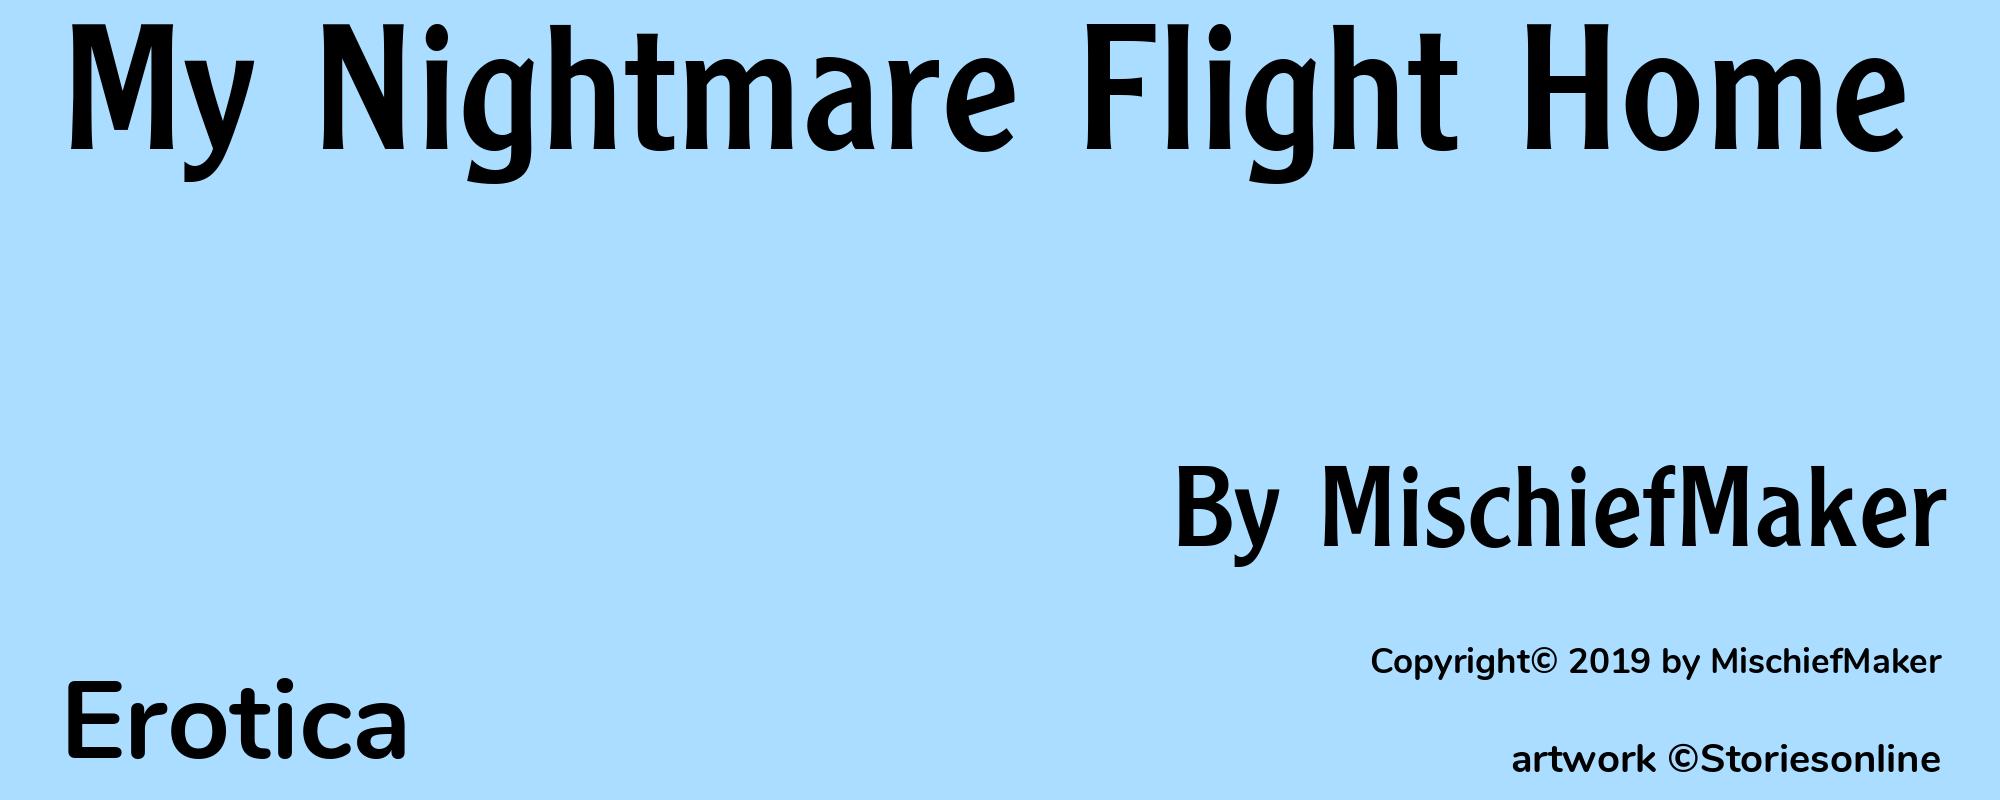 My Nightmare Flight Home - Cover